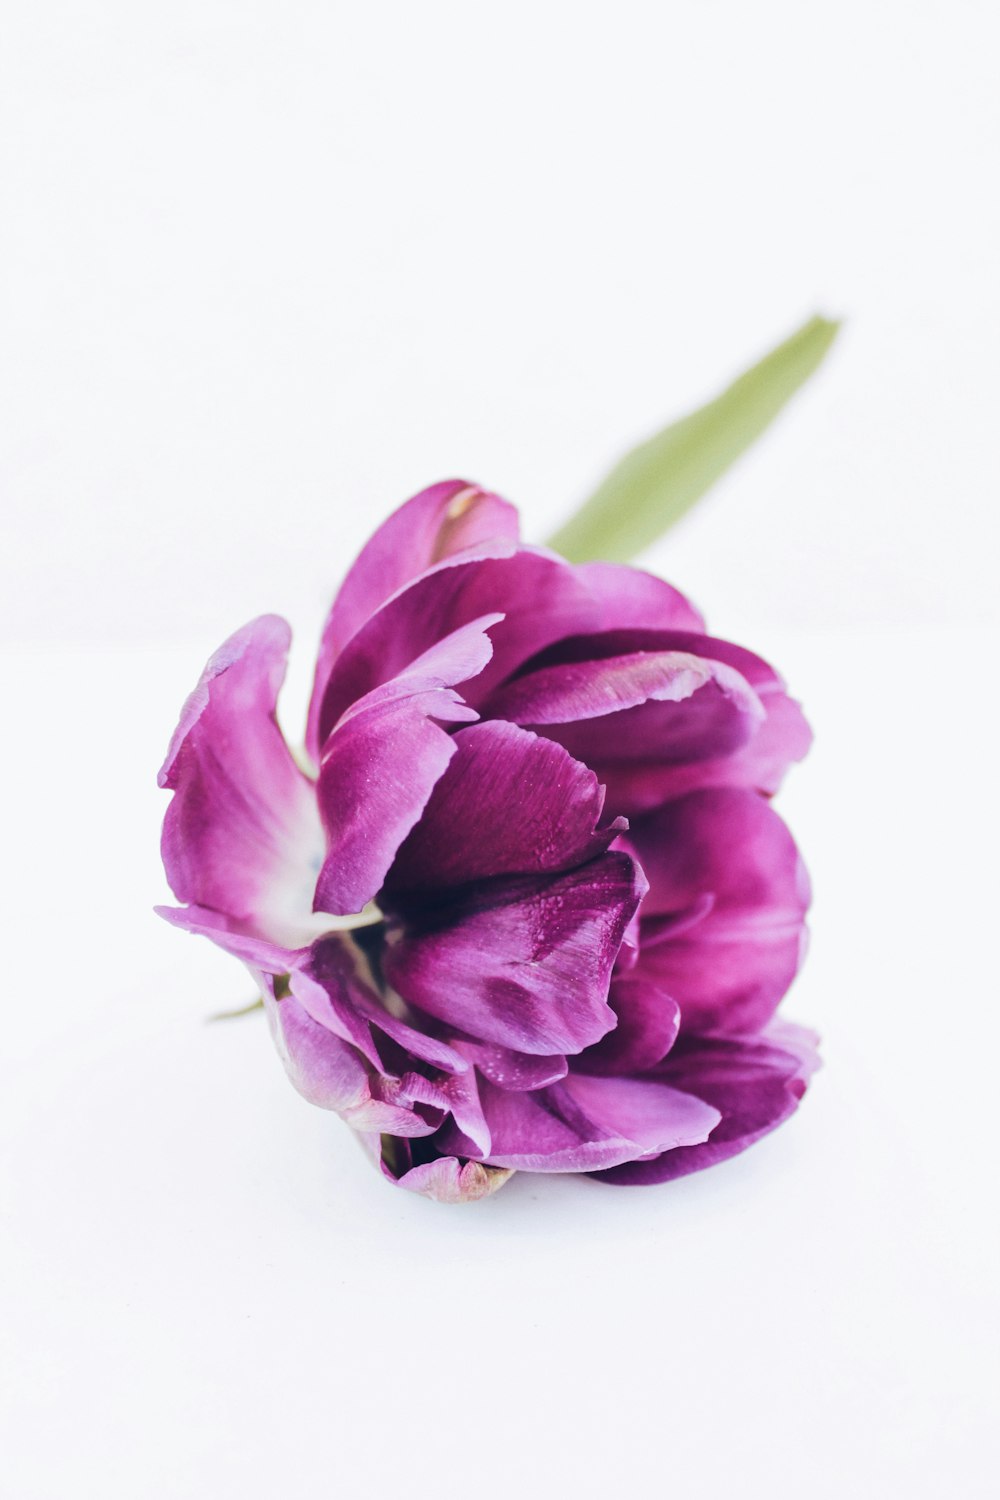 purple flower on white surface